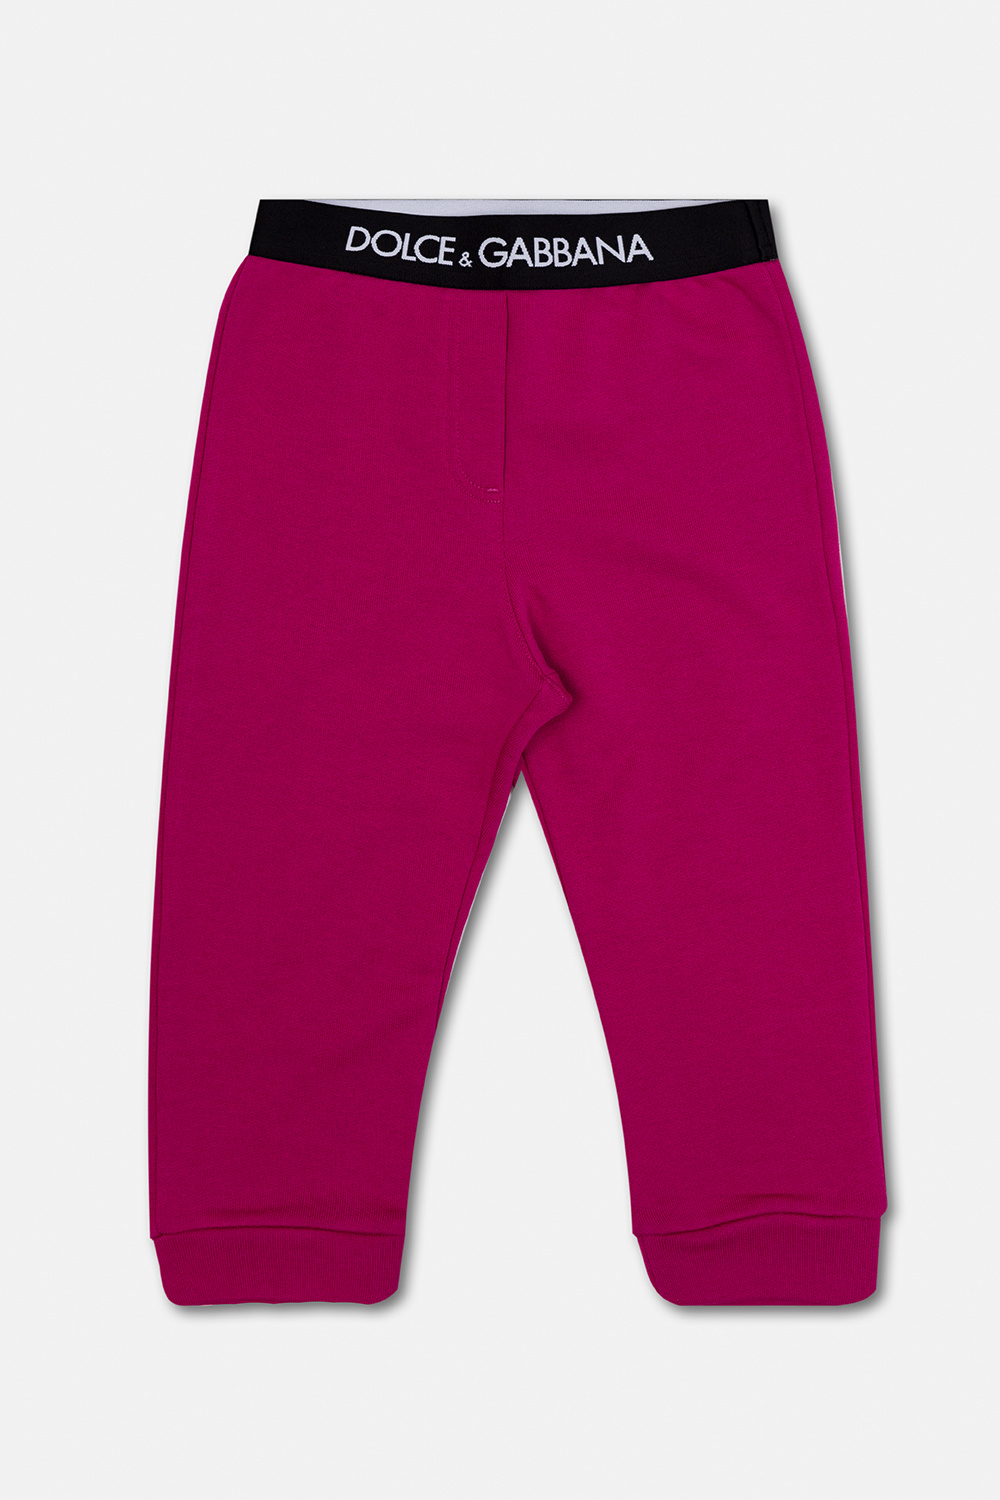 Dolce & Gabbana Kids Cotton trousers mesh with logo